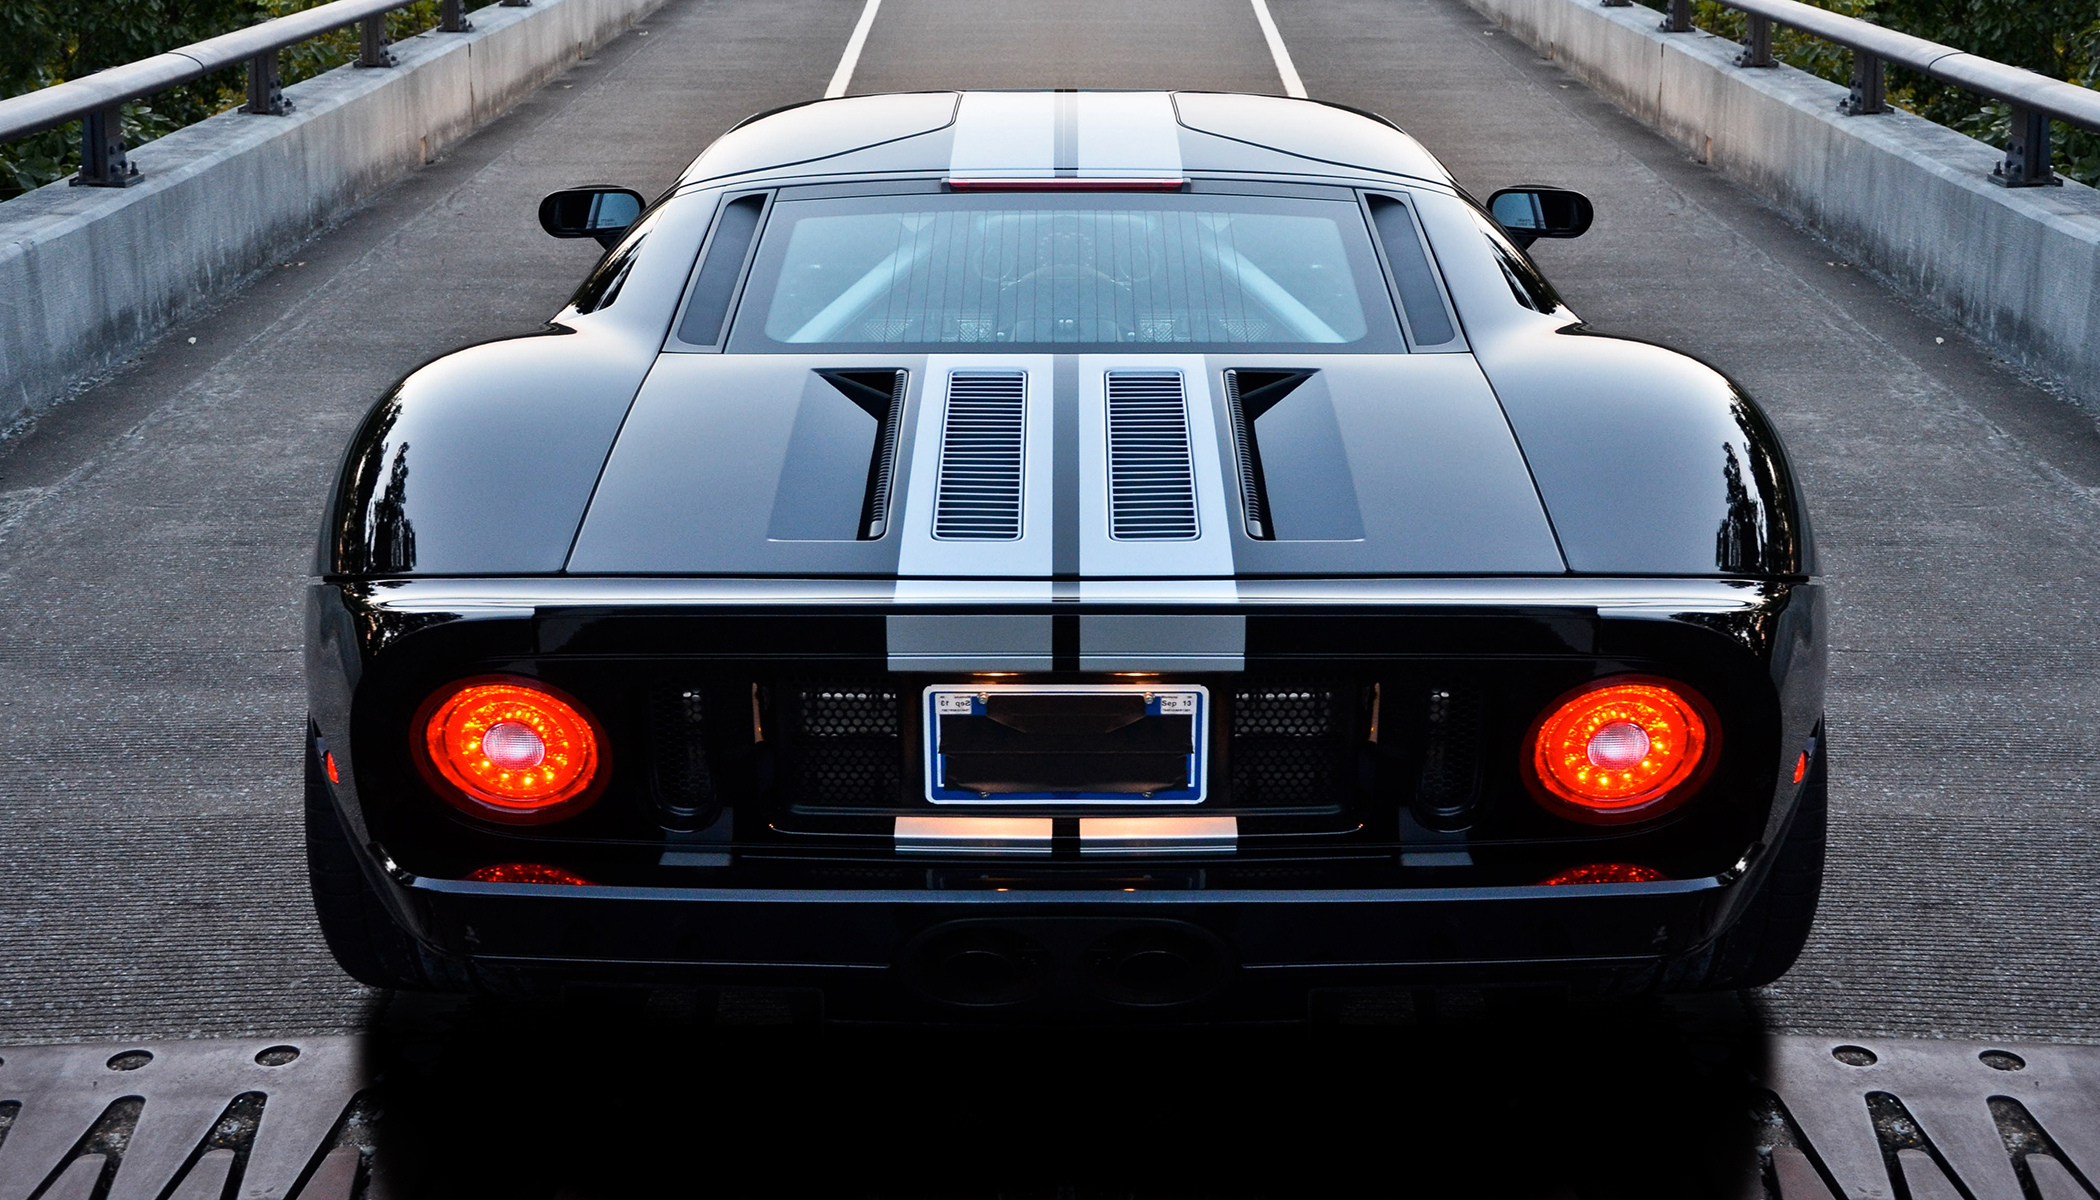 Horizontal Wallpaper cars, auto, ford, black, back view, rear view